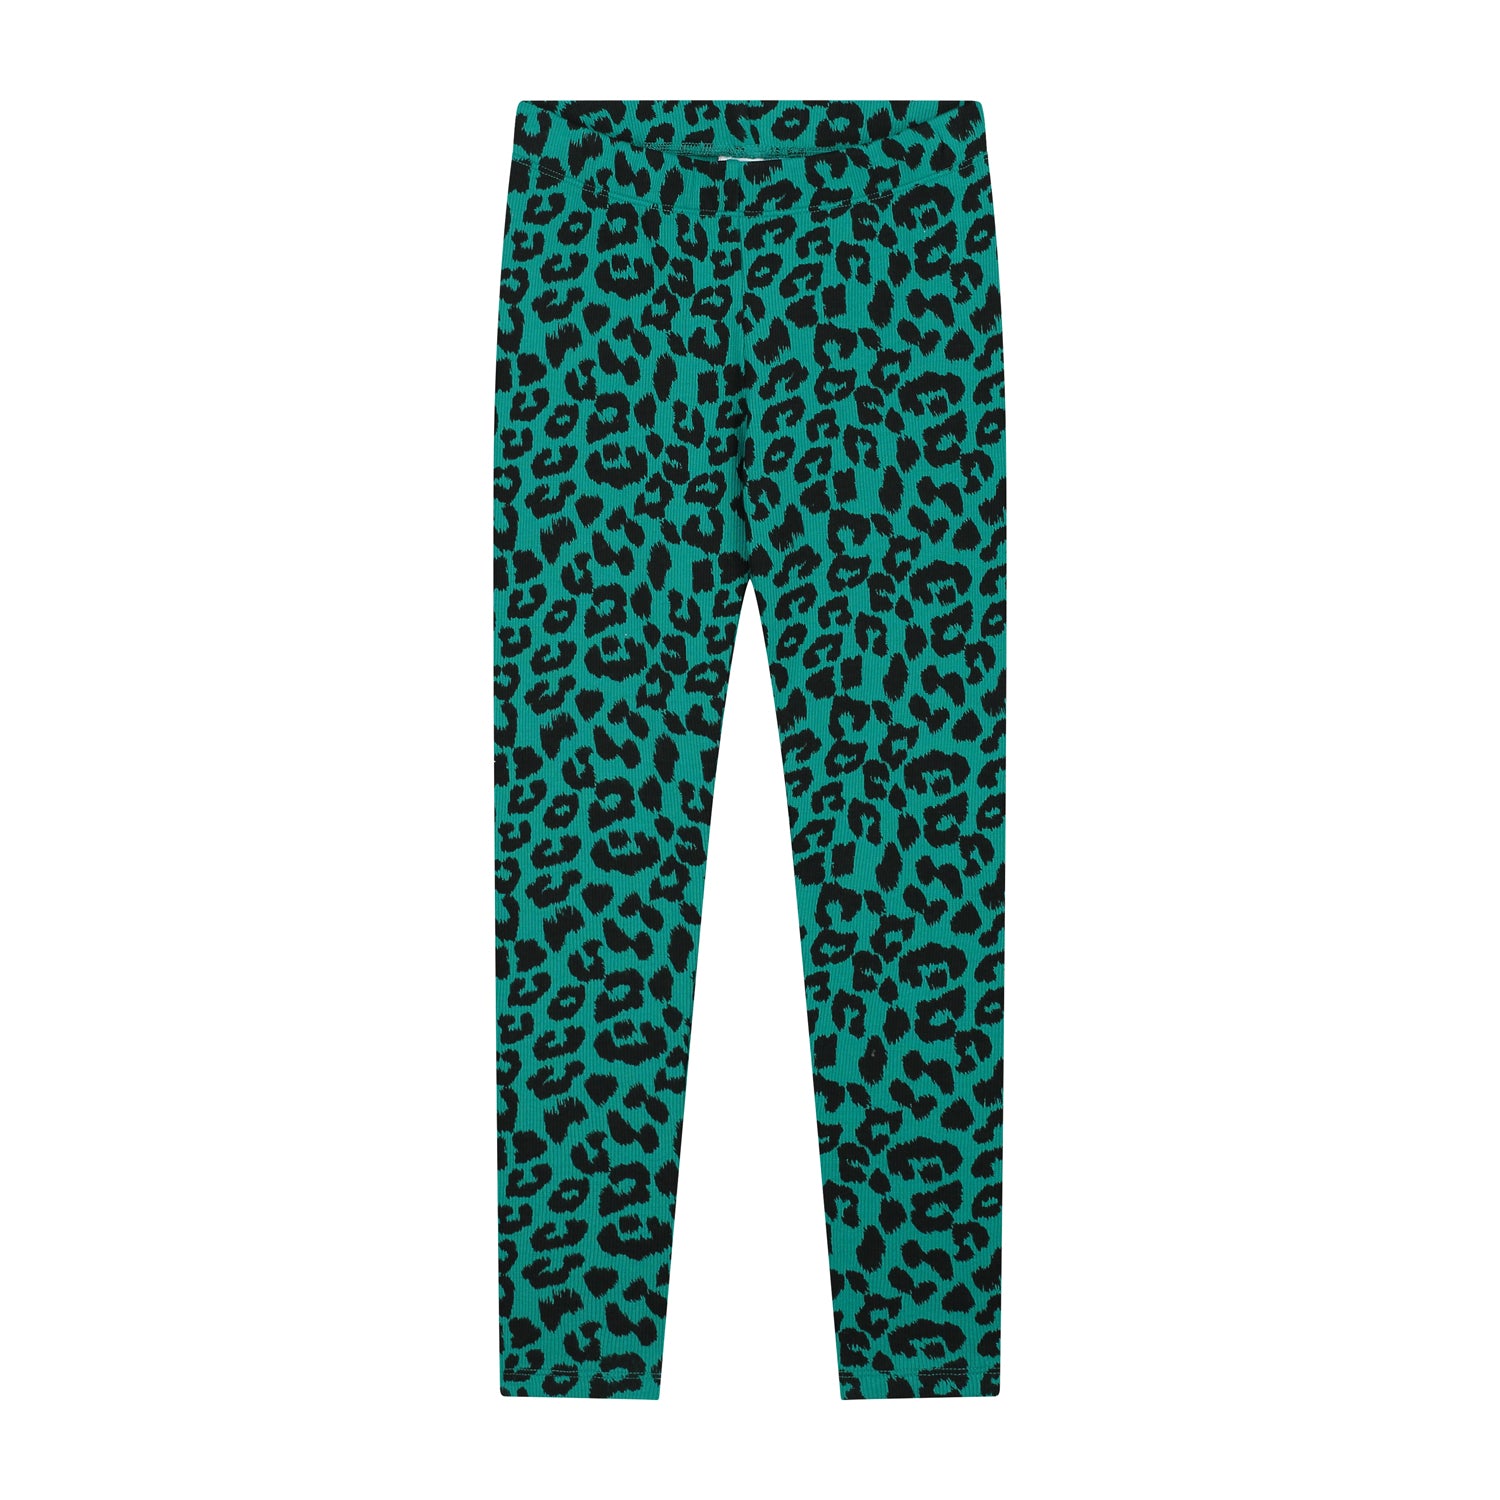 Daily Brat Leopard tights green